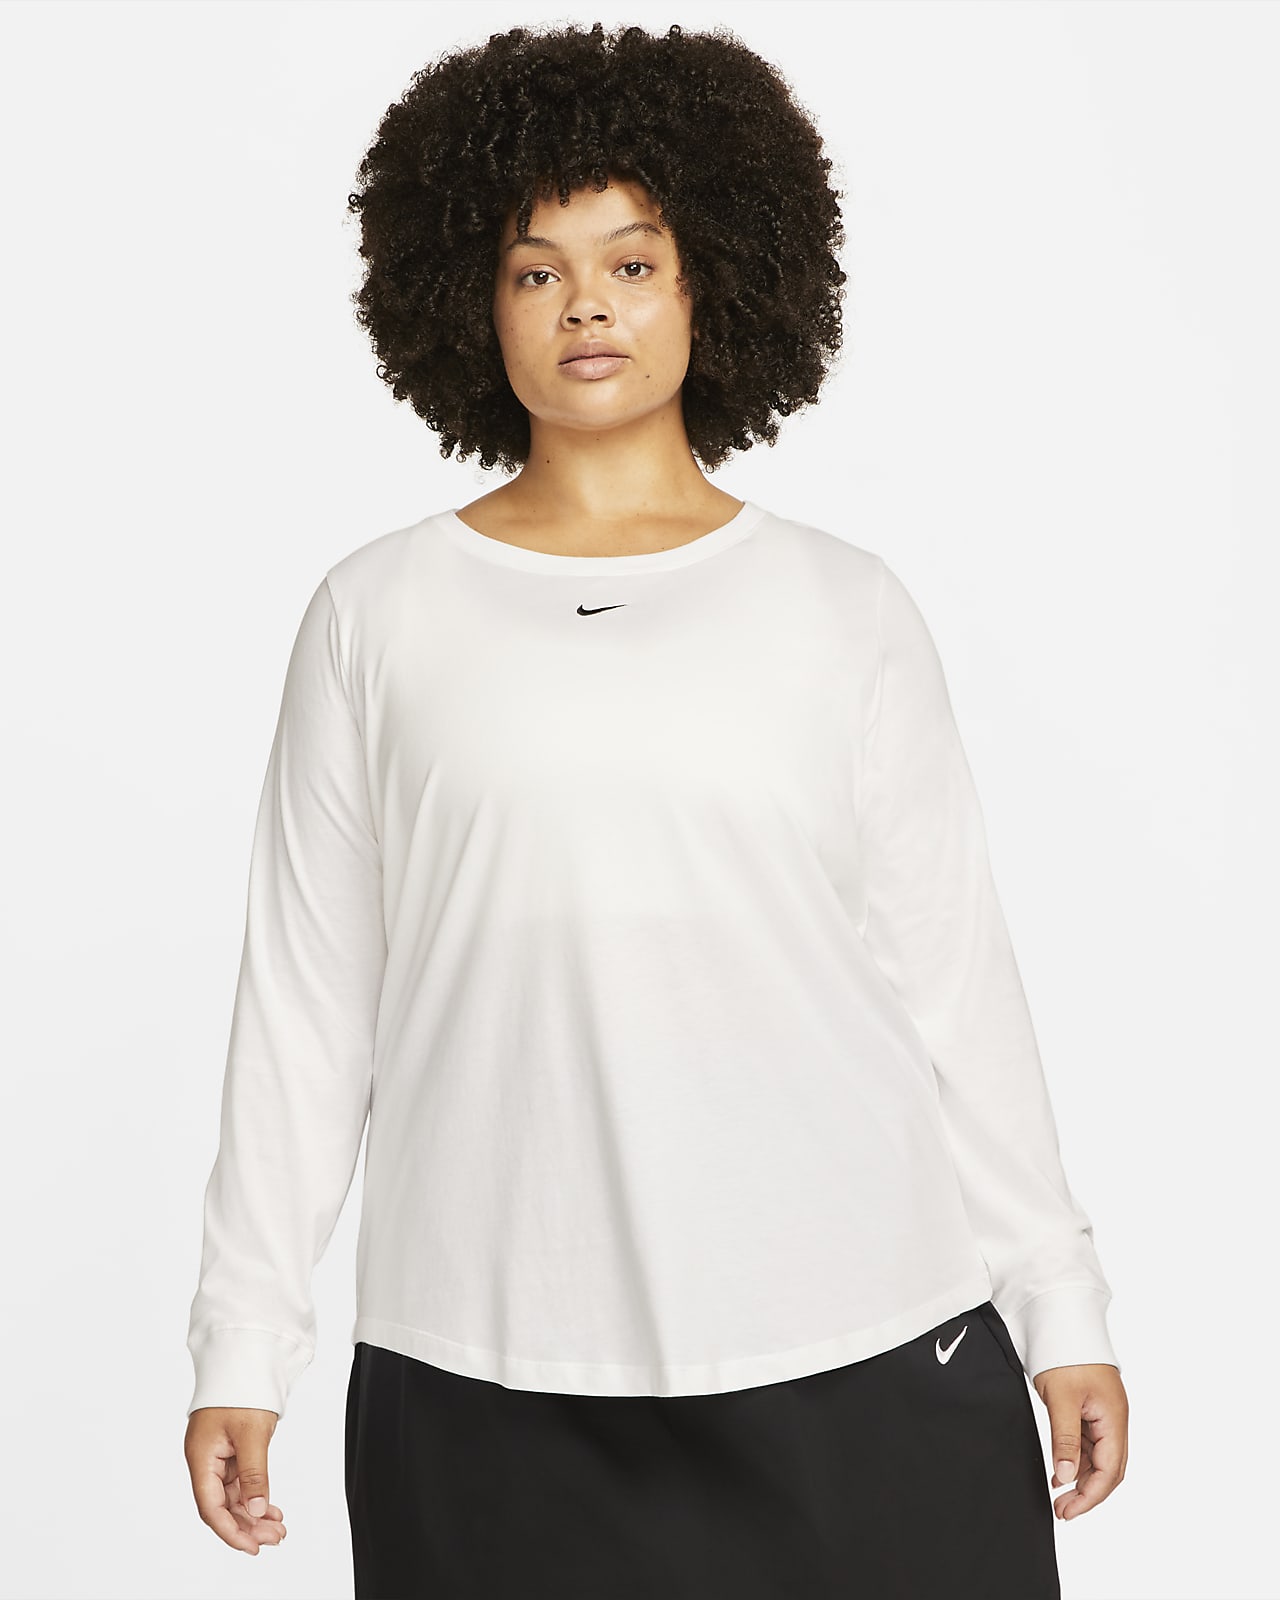 weefgetouw in het midden van niets logboek Nike Sportswear Women's Long-Sleeve T-Shirt (Plus Size). Nike LU